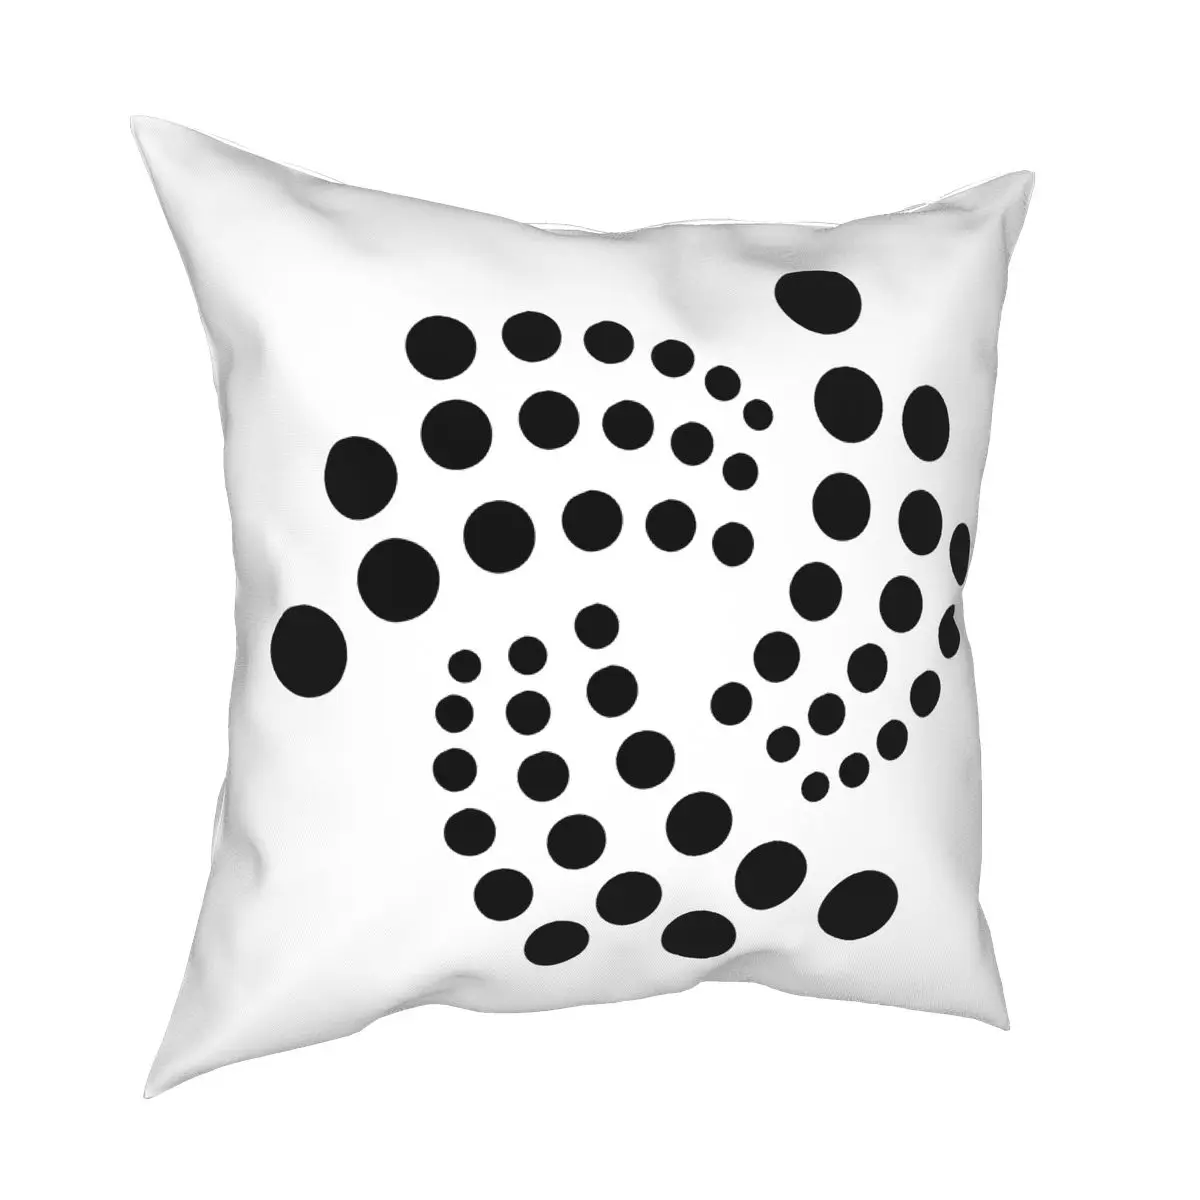 

IOTA Square Pillow Case Polyester Throw Pillow Bitcoin Crypto Cryptocurrency Ethereum Btc Blockchain Novelty Pillowcase